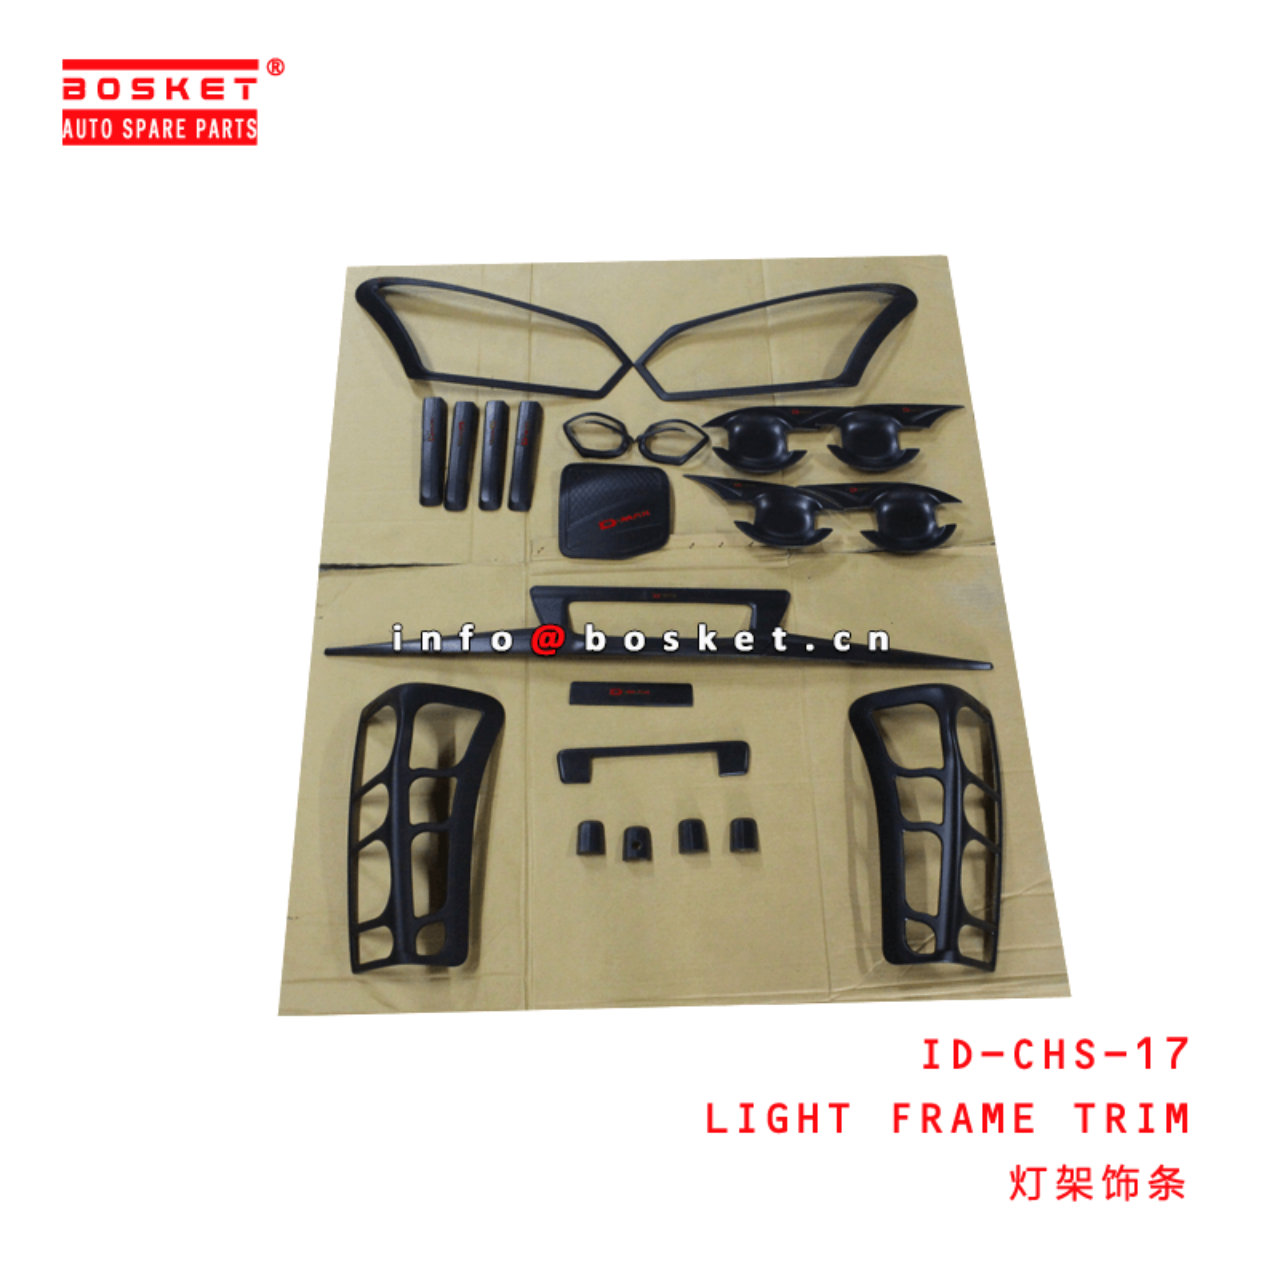  ID-CHS-17 Light Frame Trim Suitable for ISUZU D-MAX 2017